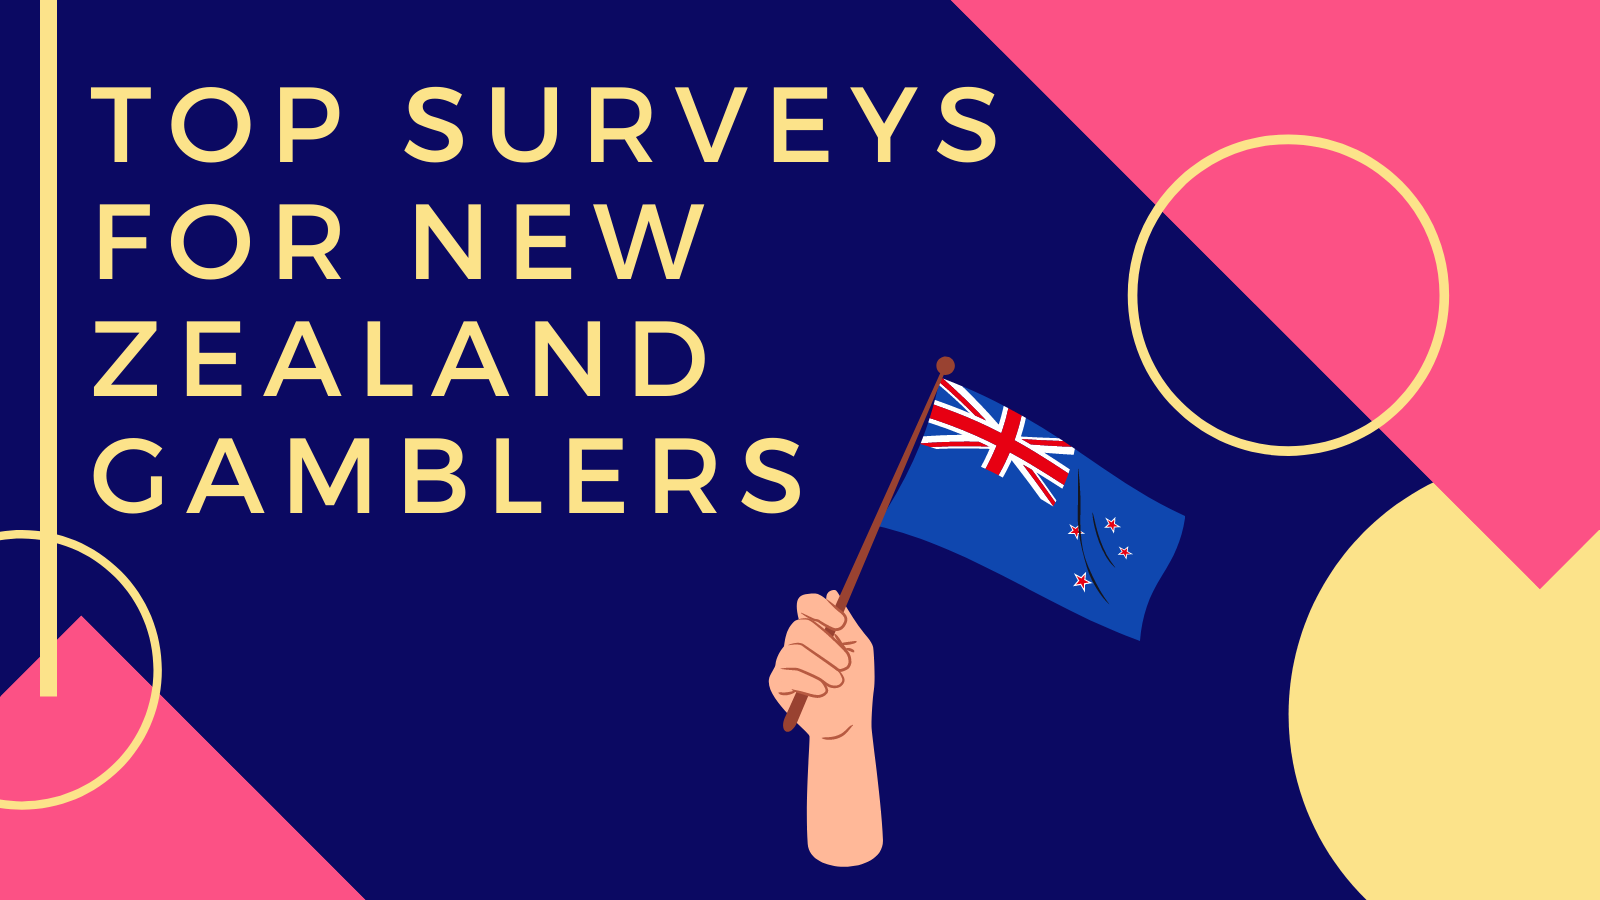 Top Surveys for New Zealand Gamblers